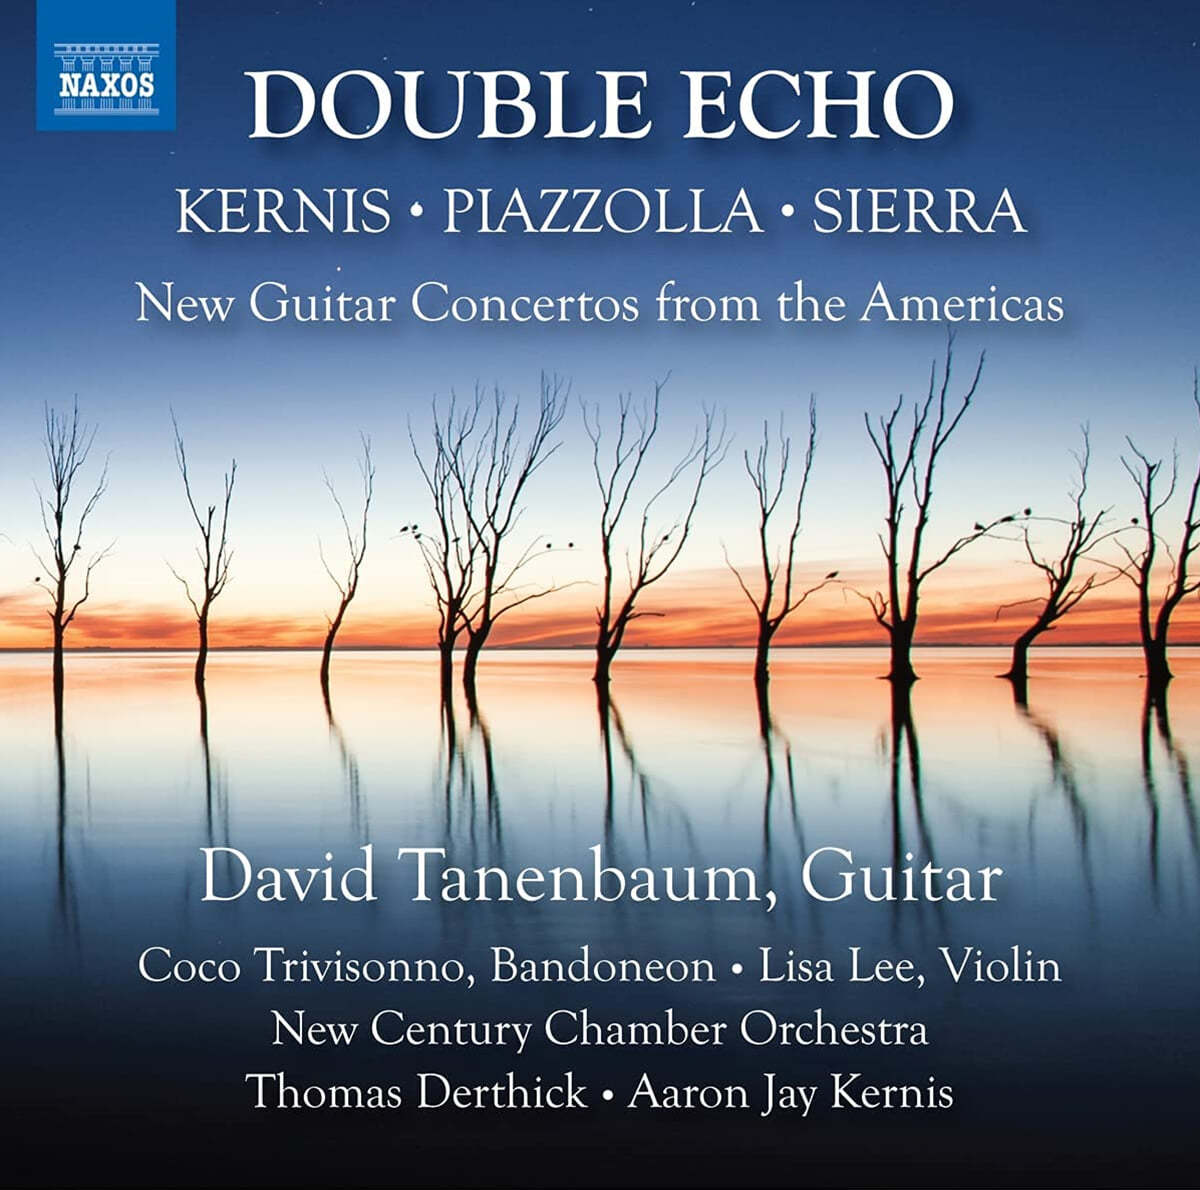 David Tanenbaum 미국의 새로운 기타 협주곡 작품들 (Double Echo - New Guitar Concertos from the Americas) 